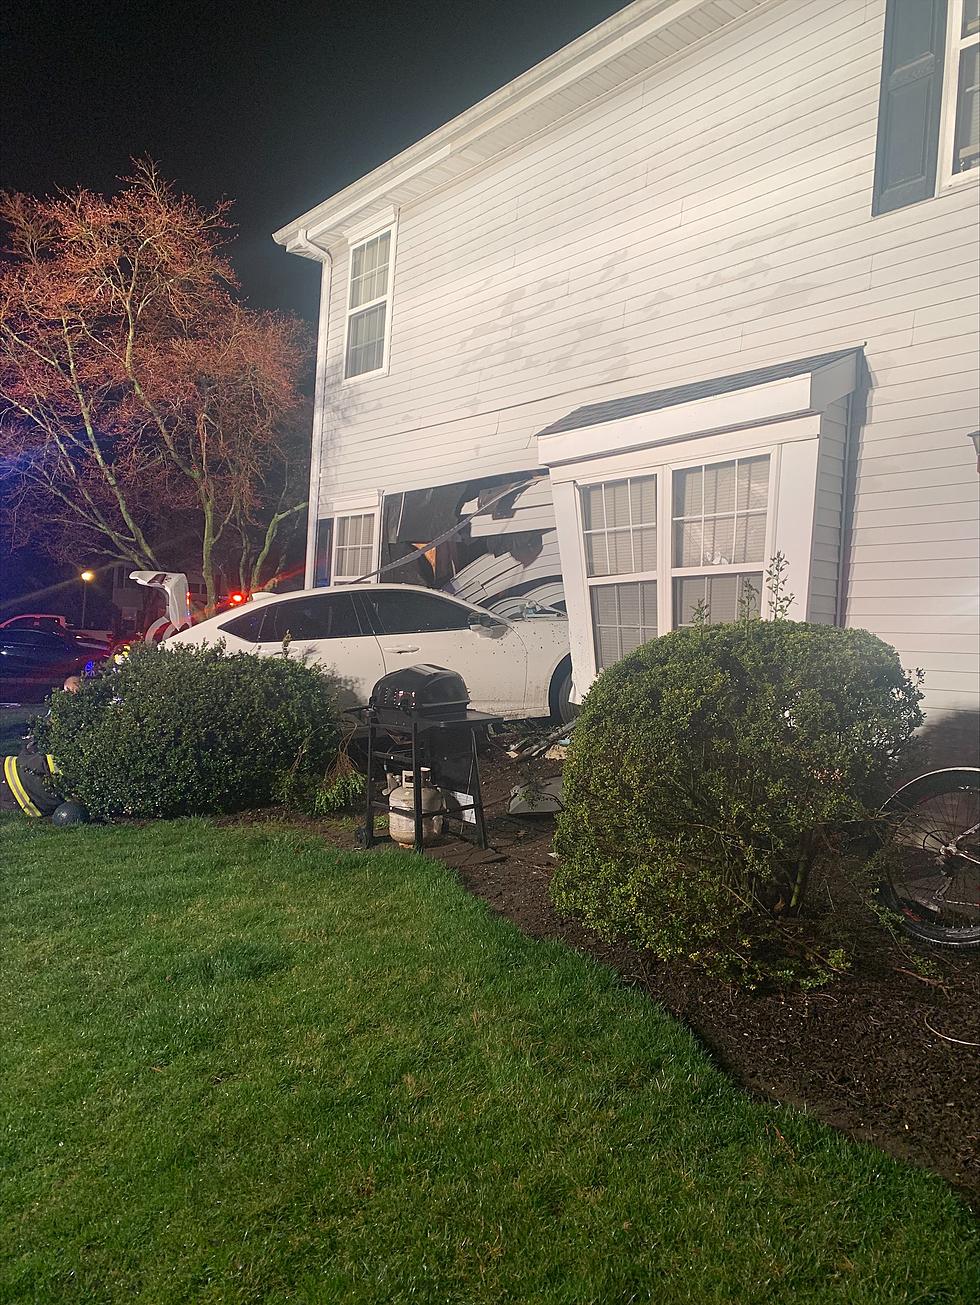 Accused drunk driver slams car into house in Morganville, NJ